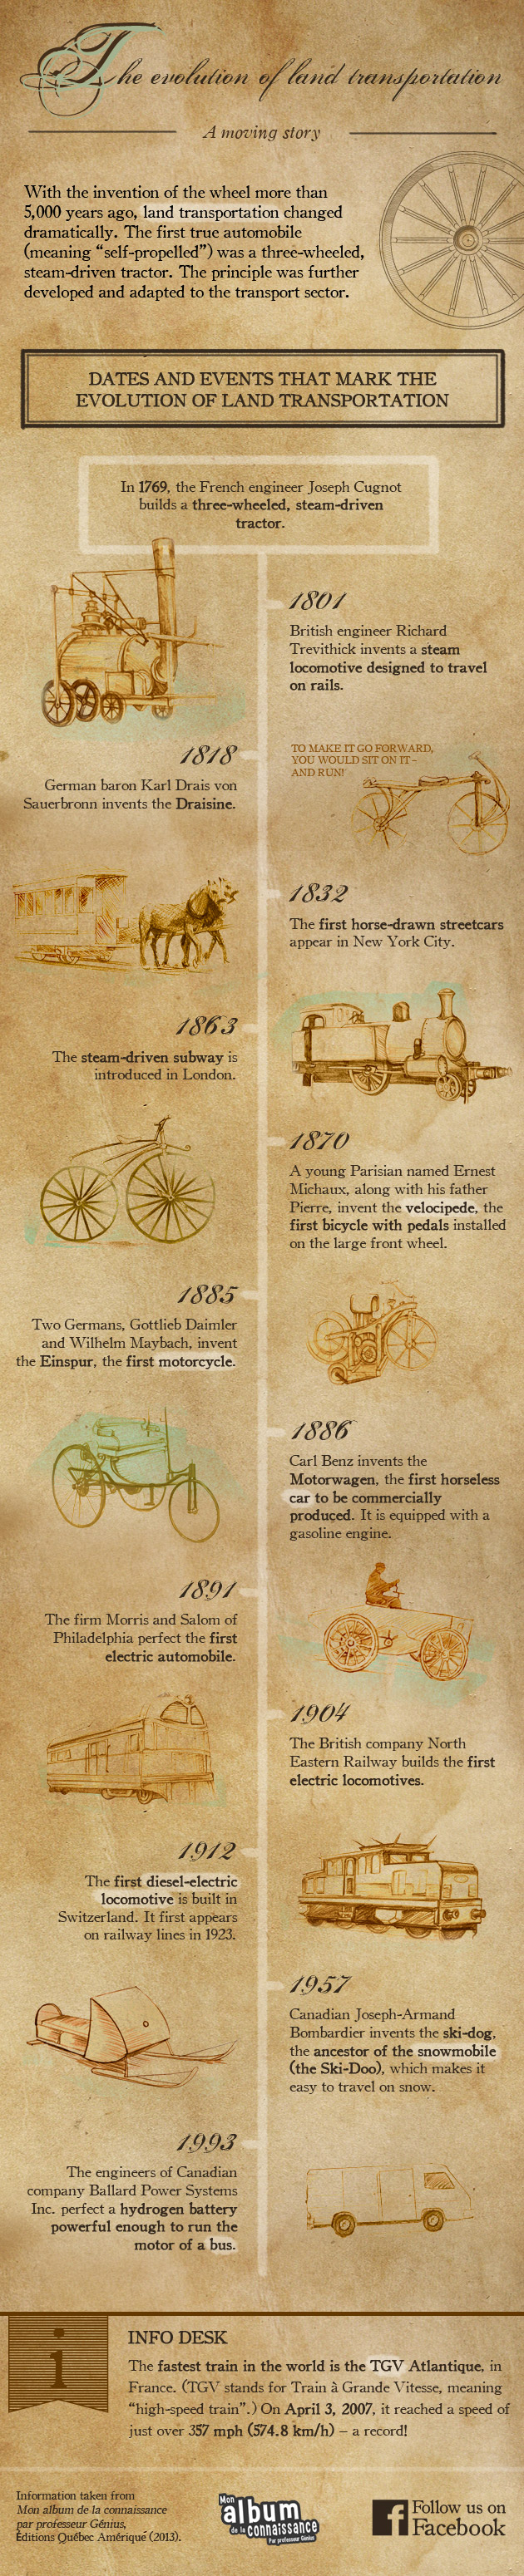 Infographic: The evolution of land transportation